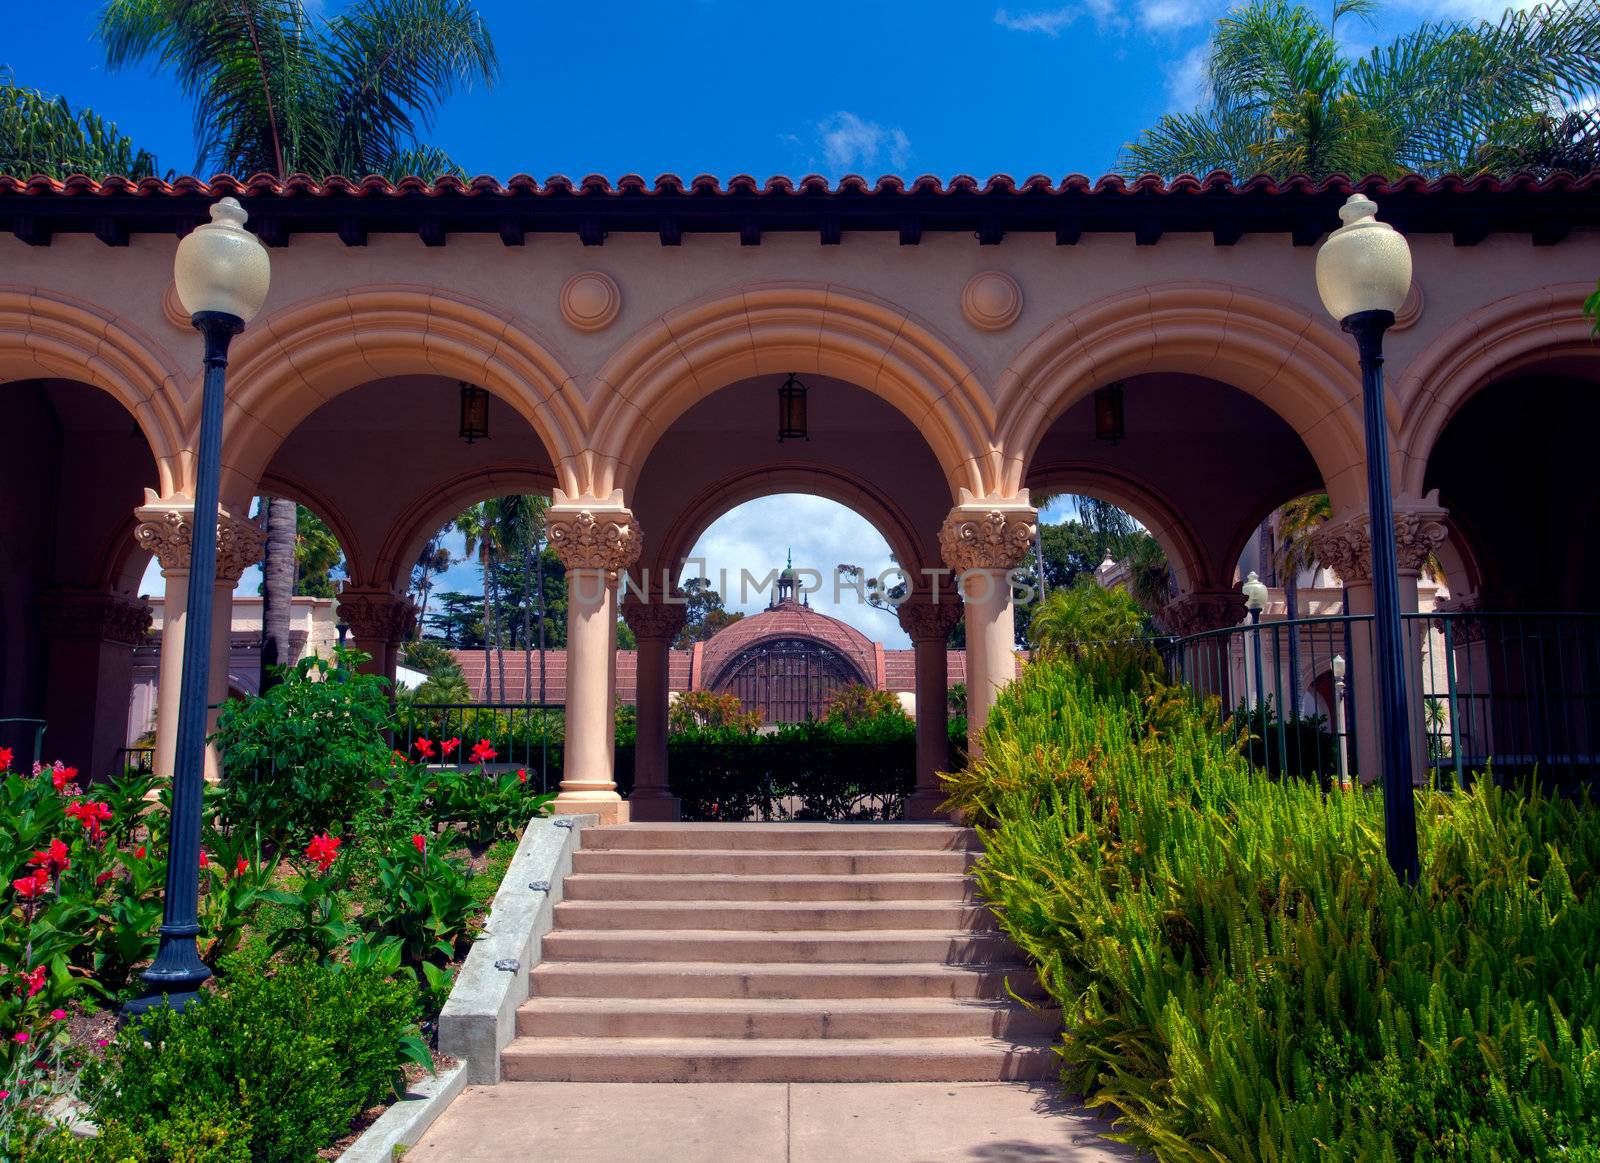 View through the arches of Casa de Balboa building in Balboa Park in San Diego to Botanical Building